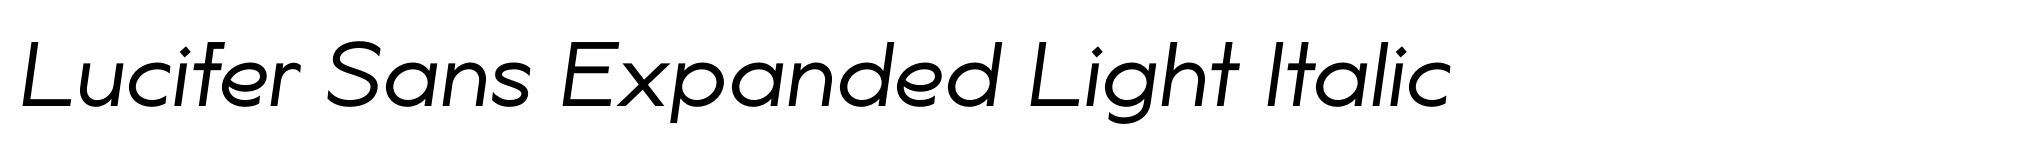 Lucifer Sans Expanded Light Italic image